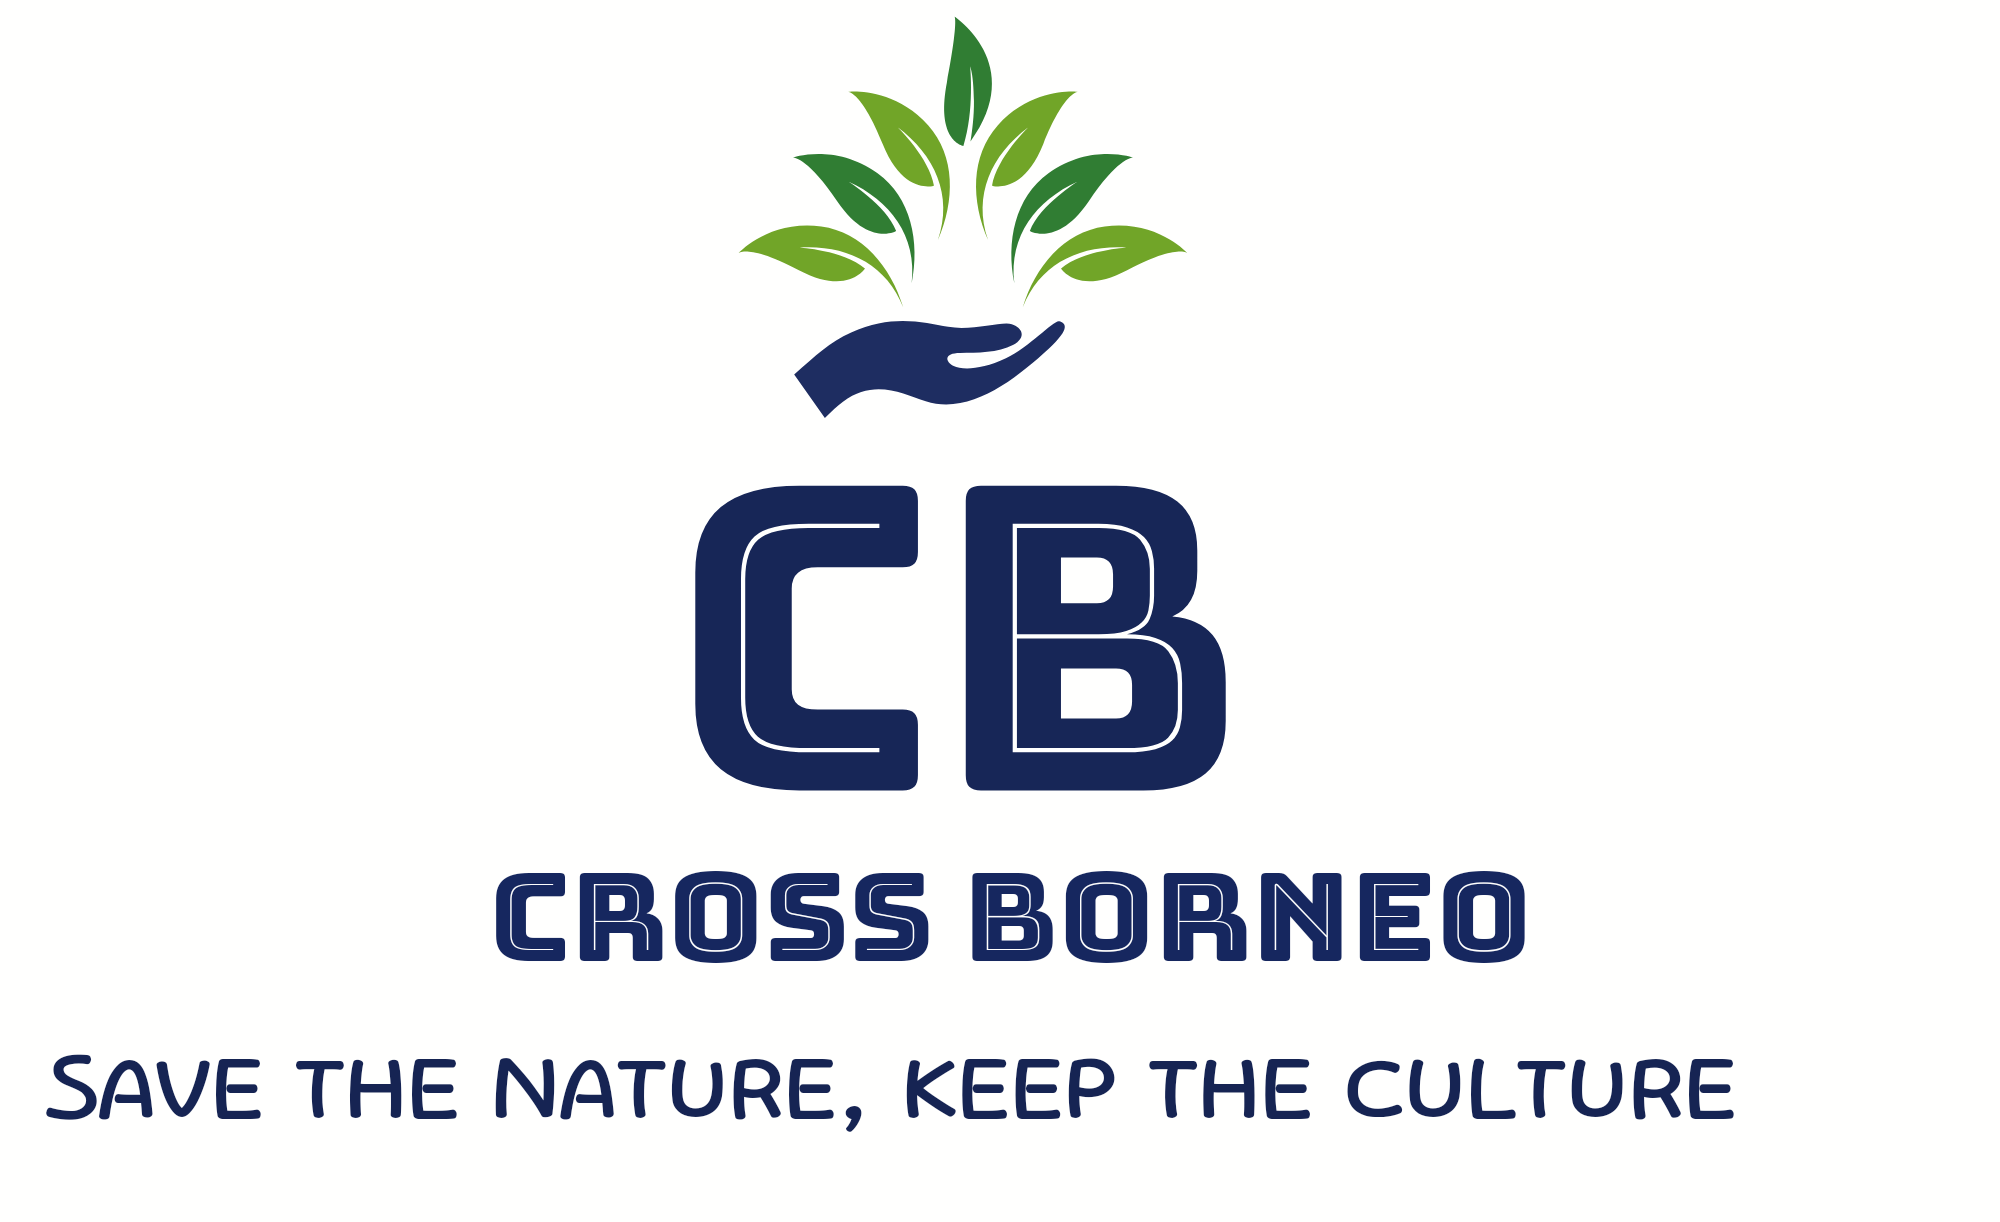 THE CROSS BORNEO INDONESIA